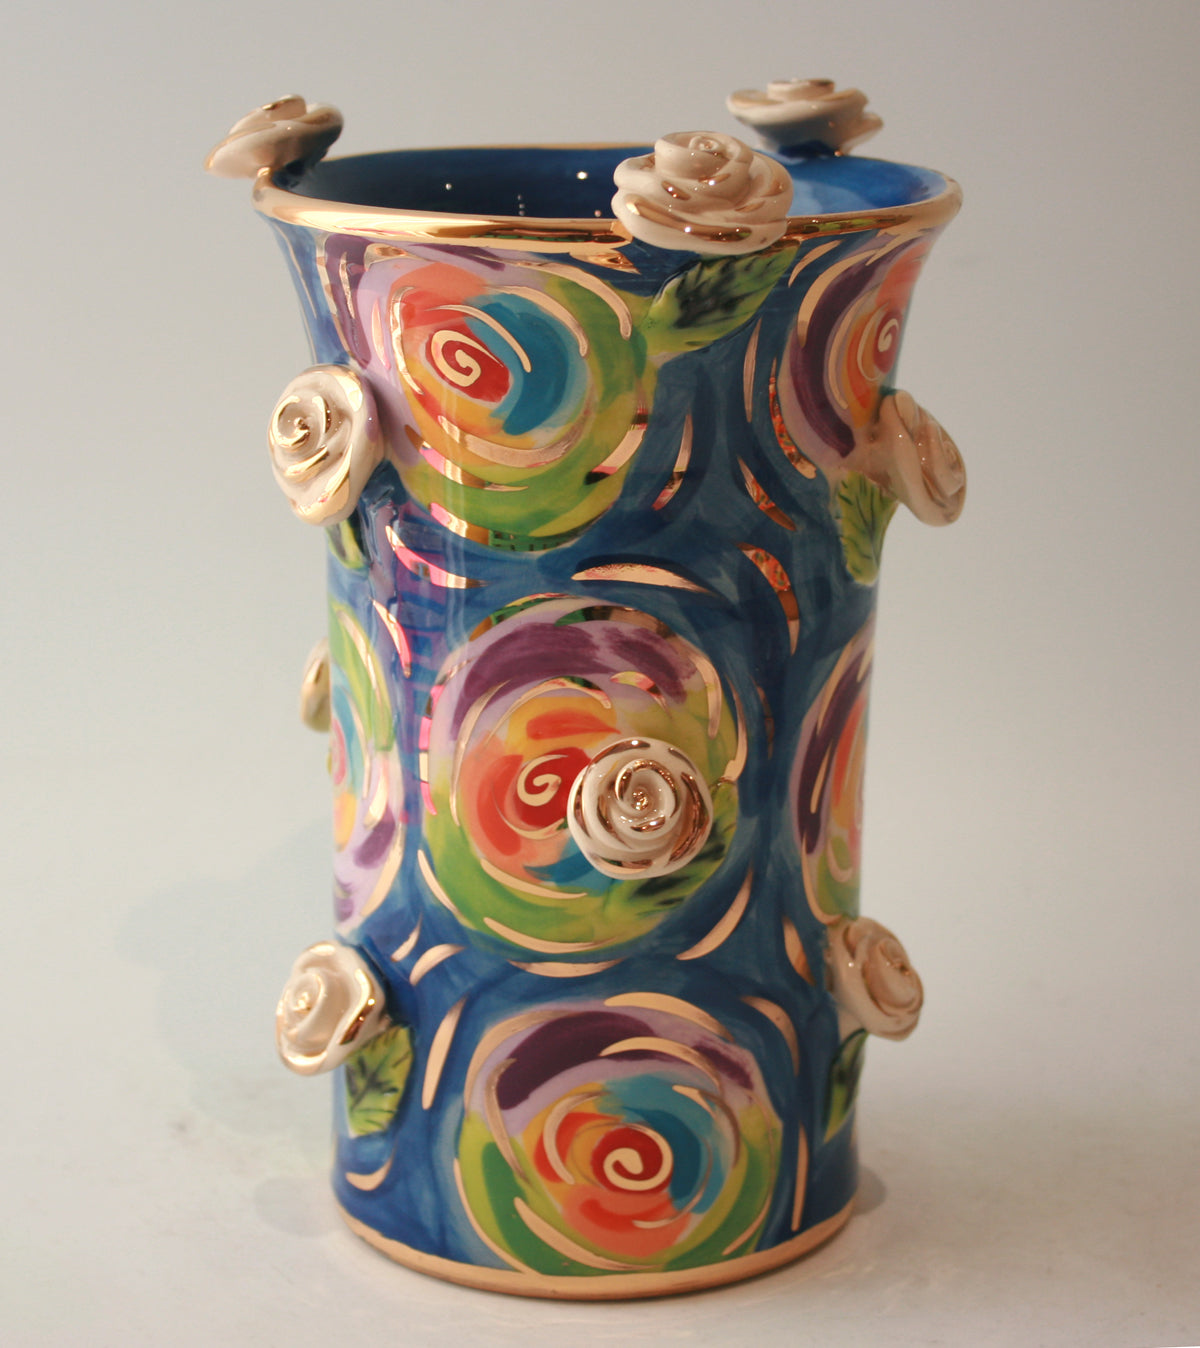 Medium Rose Studded Cylinder Vase in Swirls